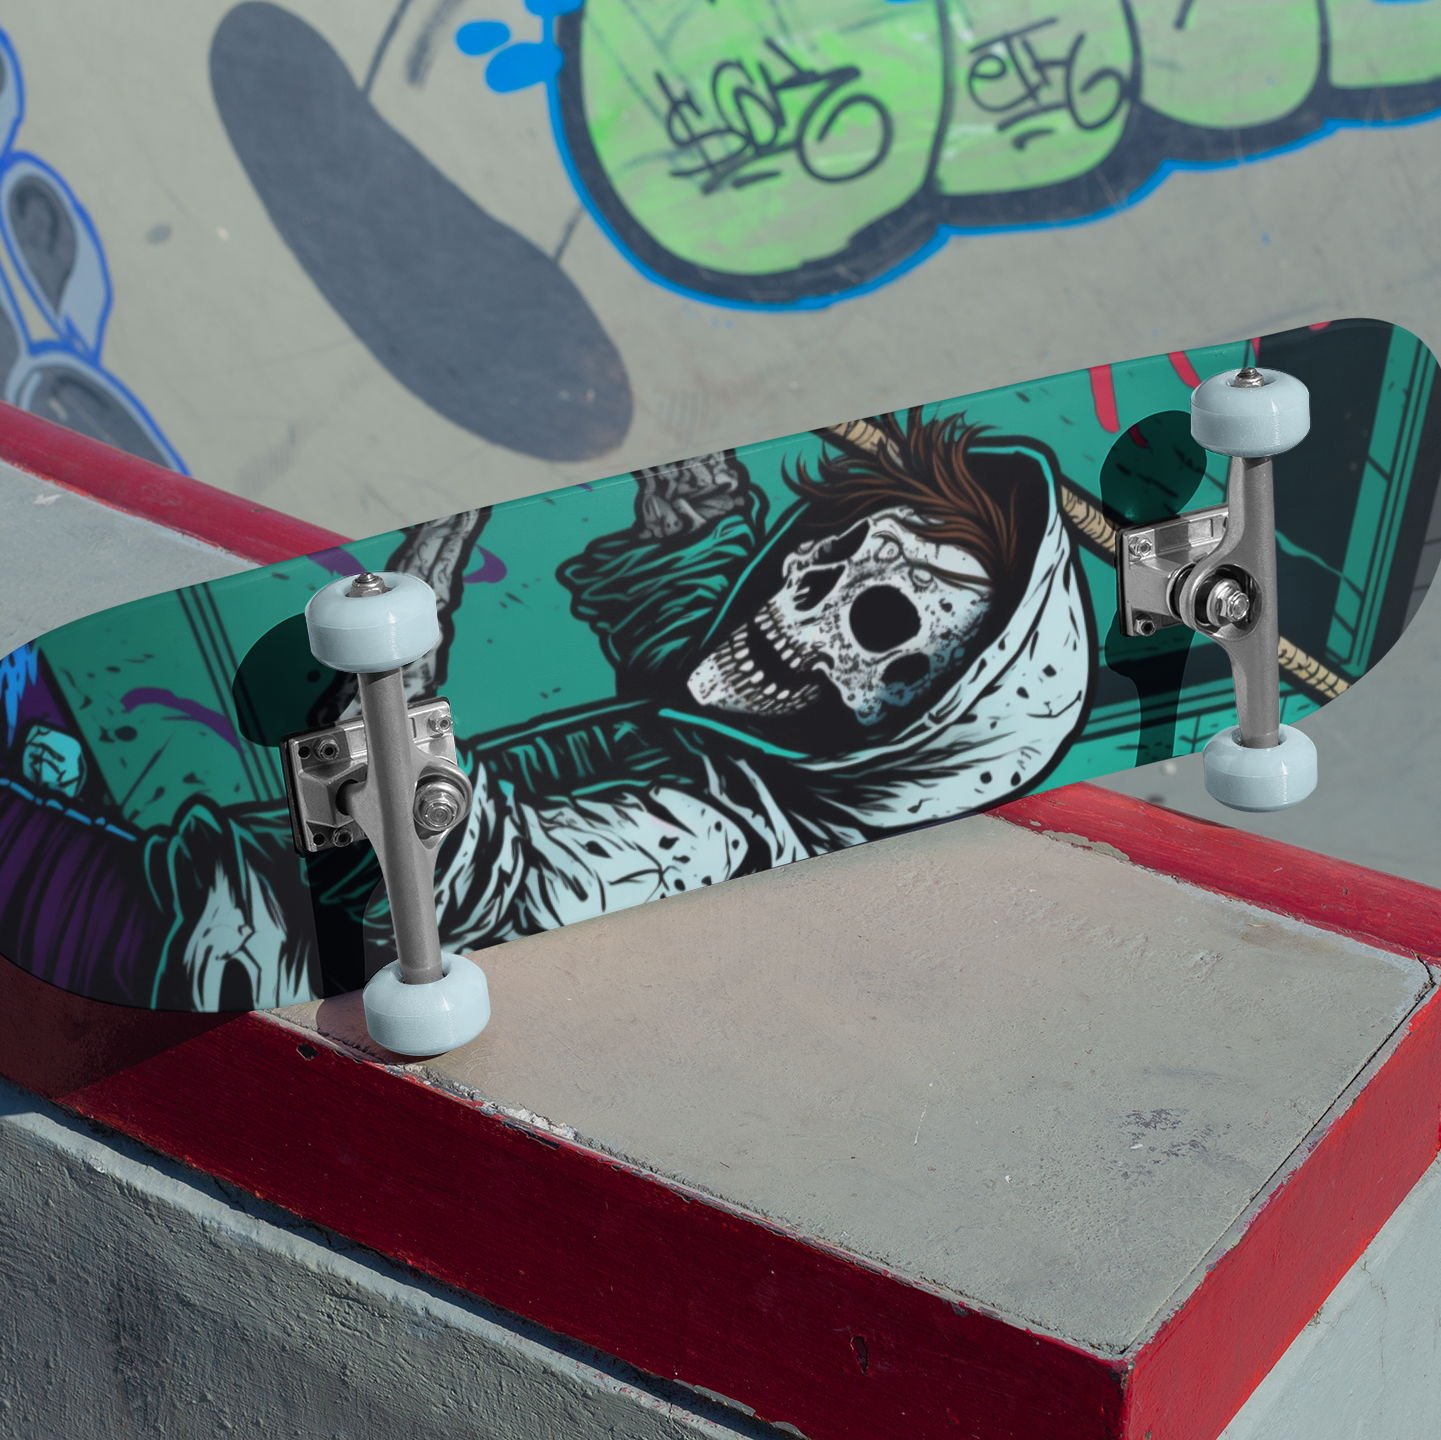 Mockup of a skateboard lying on the floor at a skatepark 27193